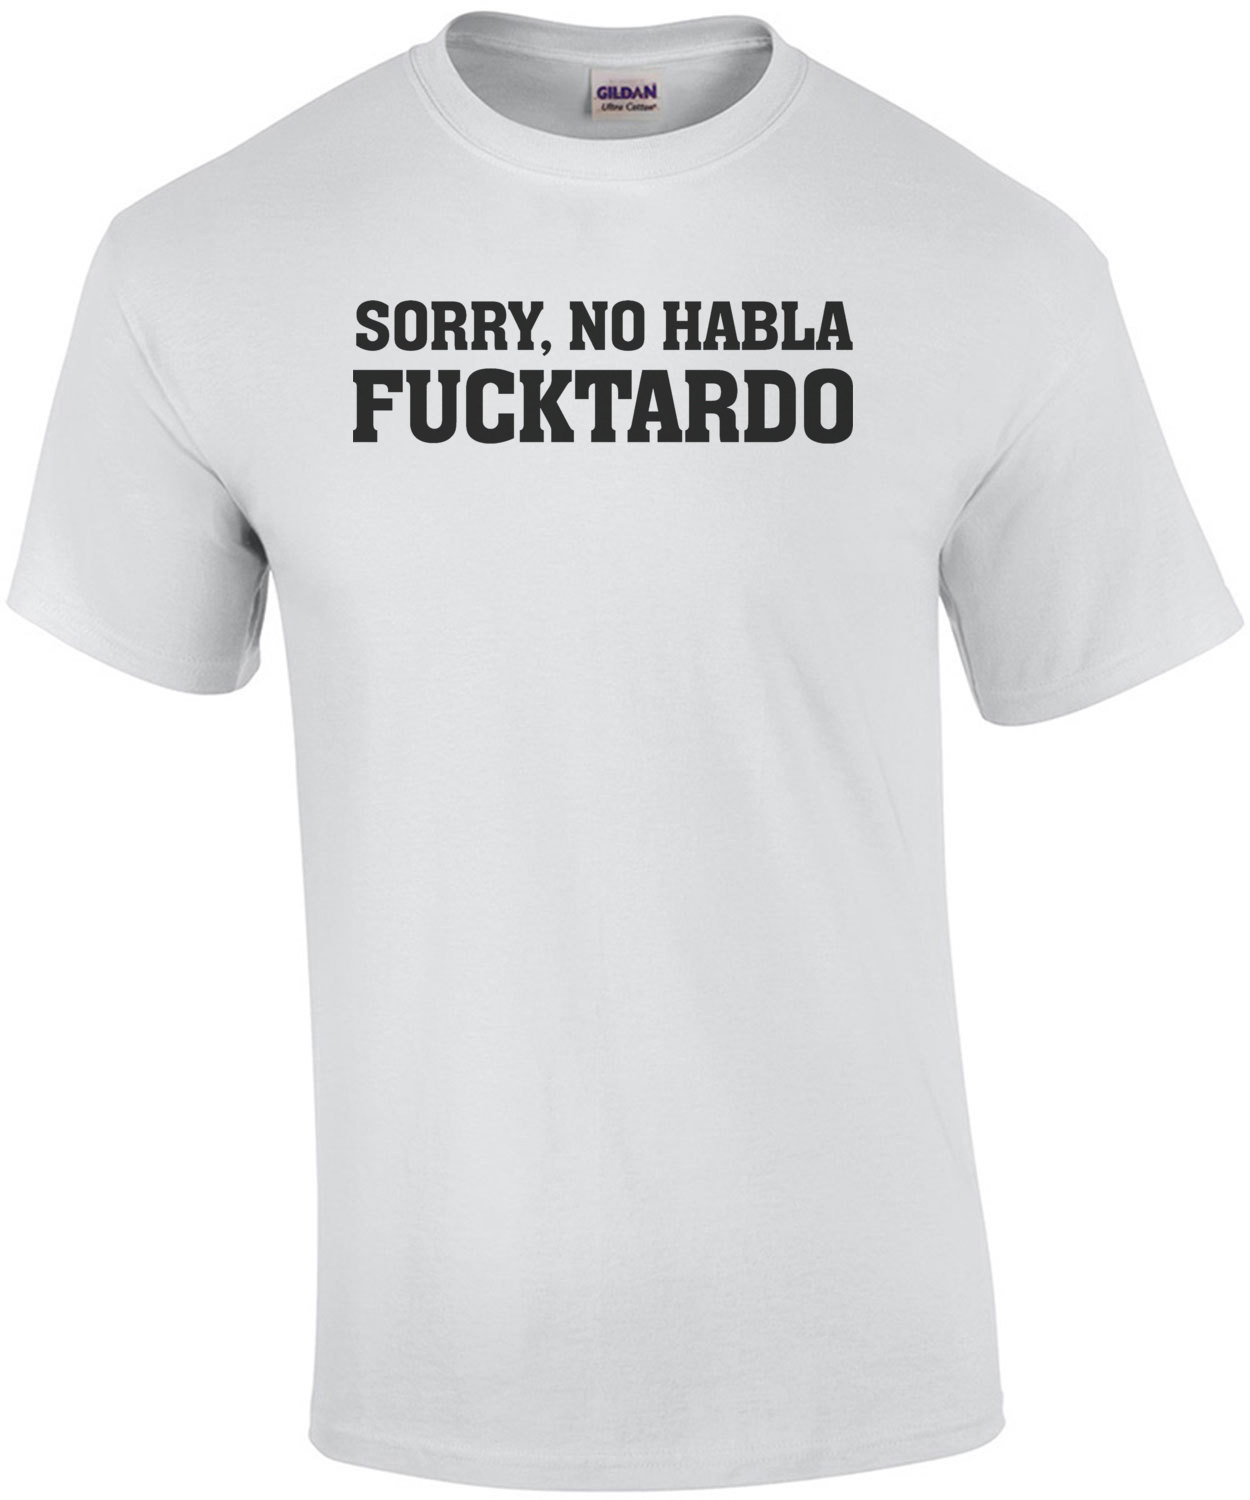 Sorry, no habla fucktardo - funny t-shirt